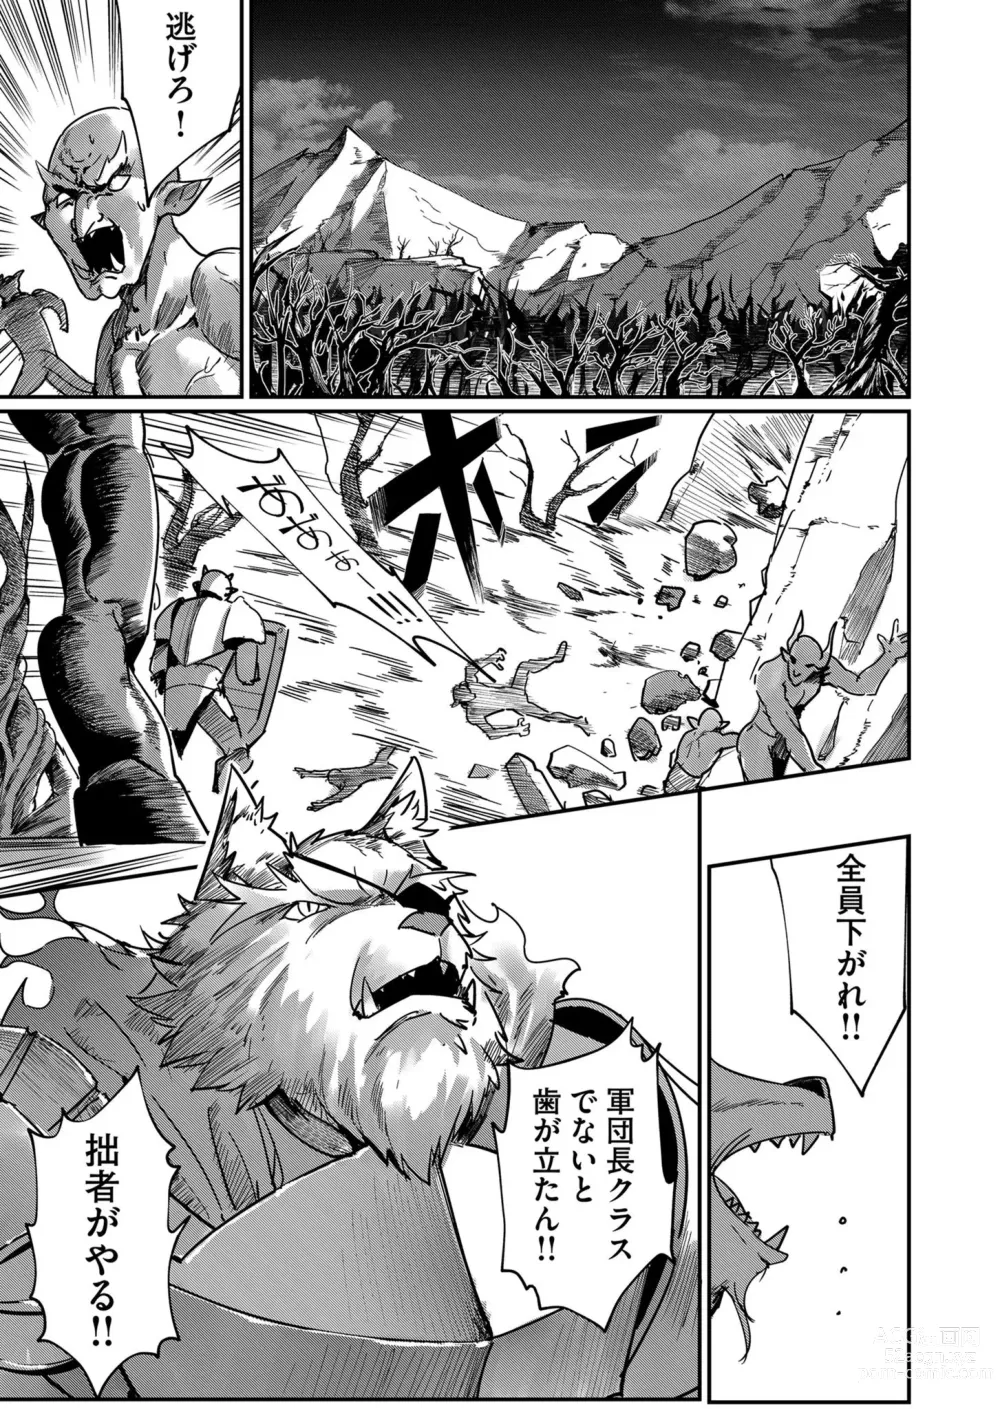 Page 27 of manga Kichiku Eiyuu Vol.01